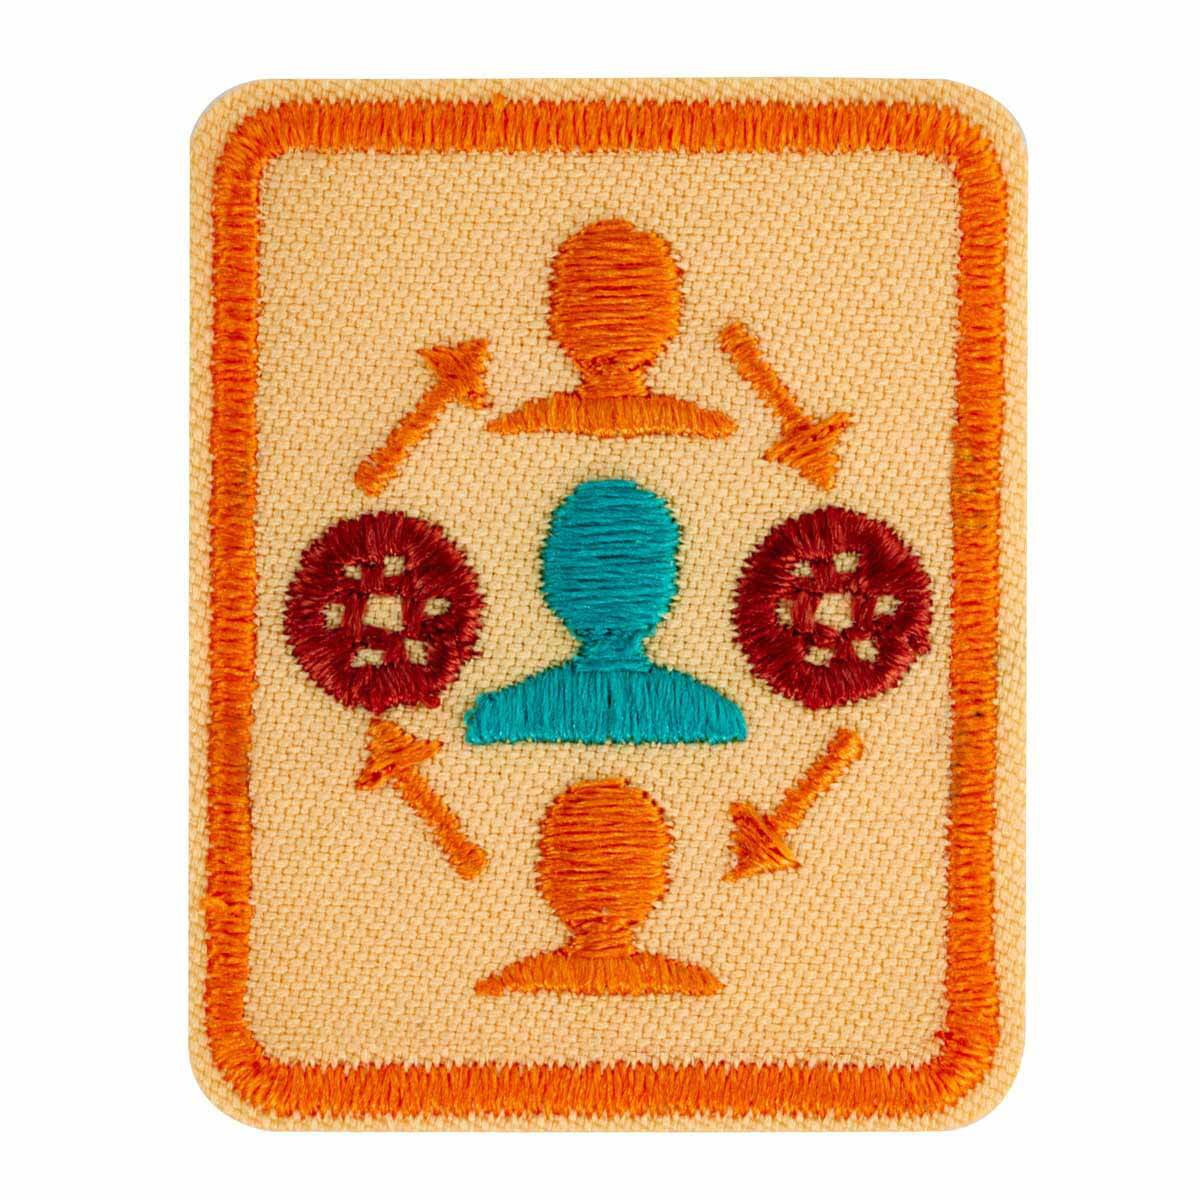 My Cookie Network Badge